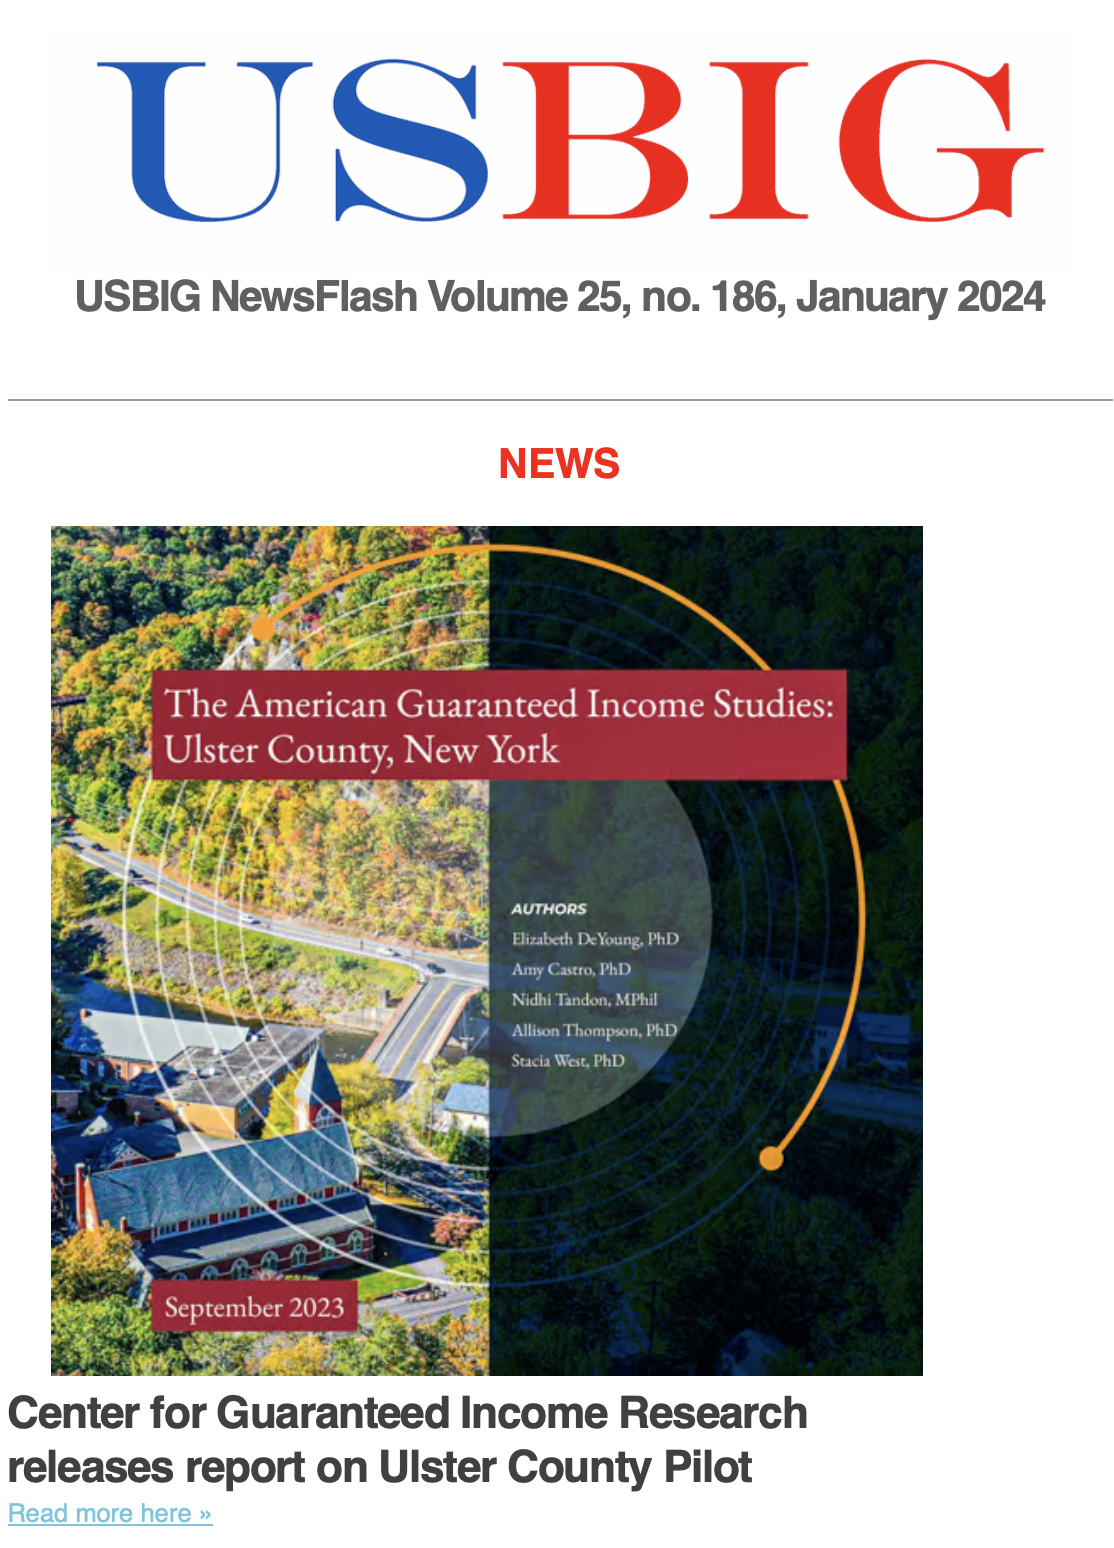 USBIG Newsflash, January 2024